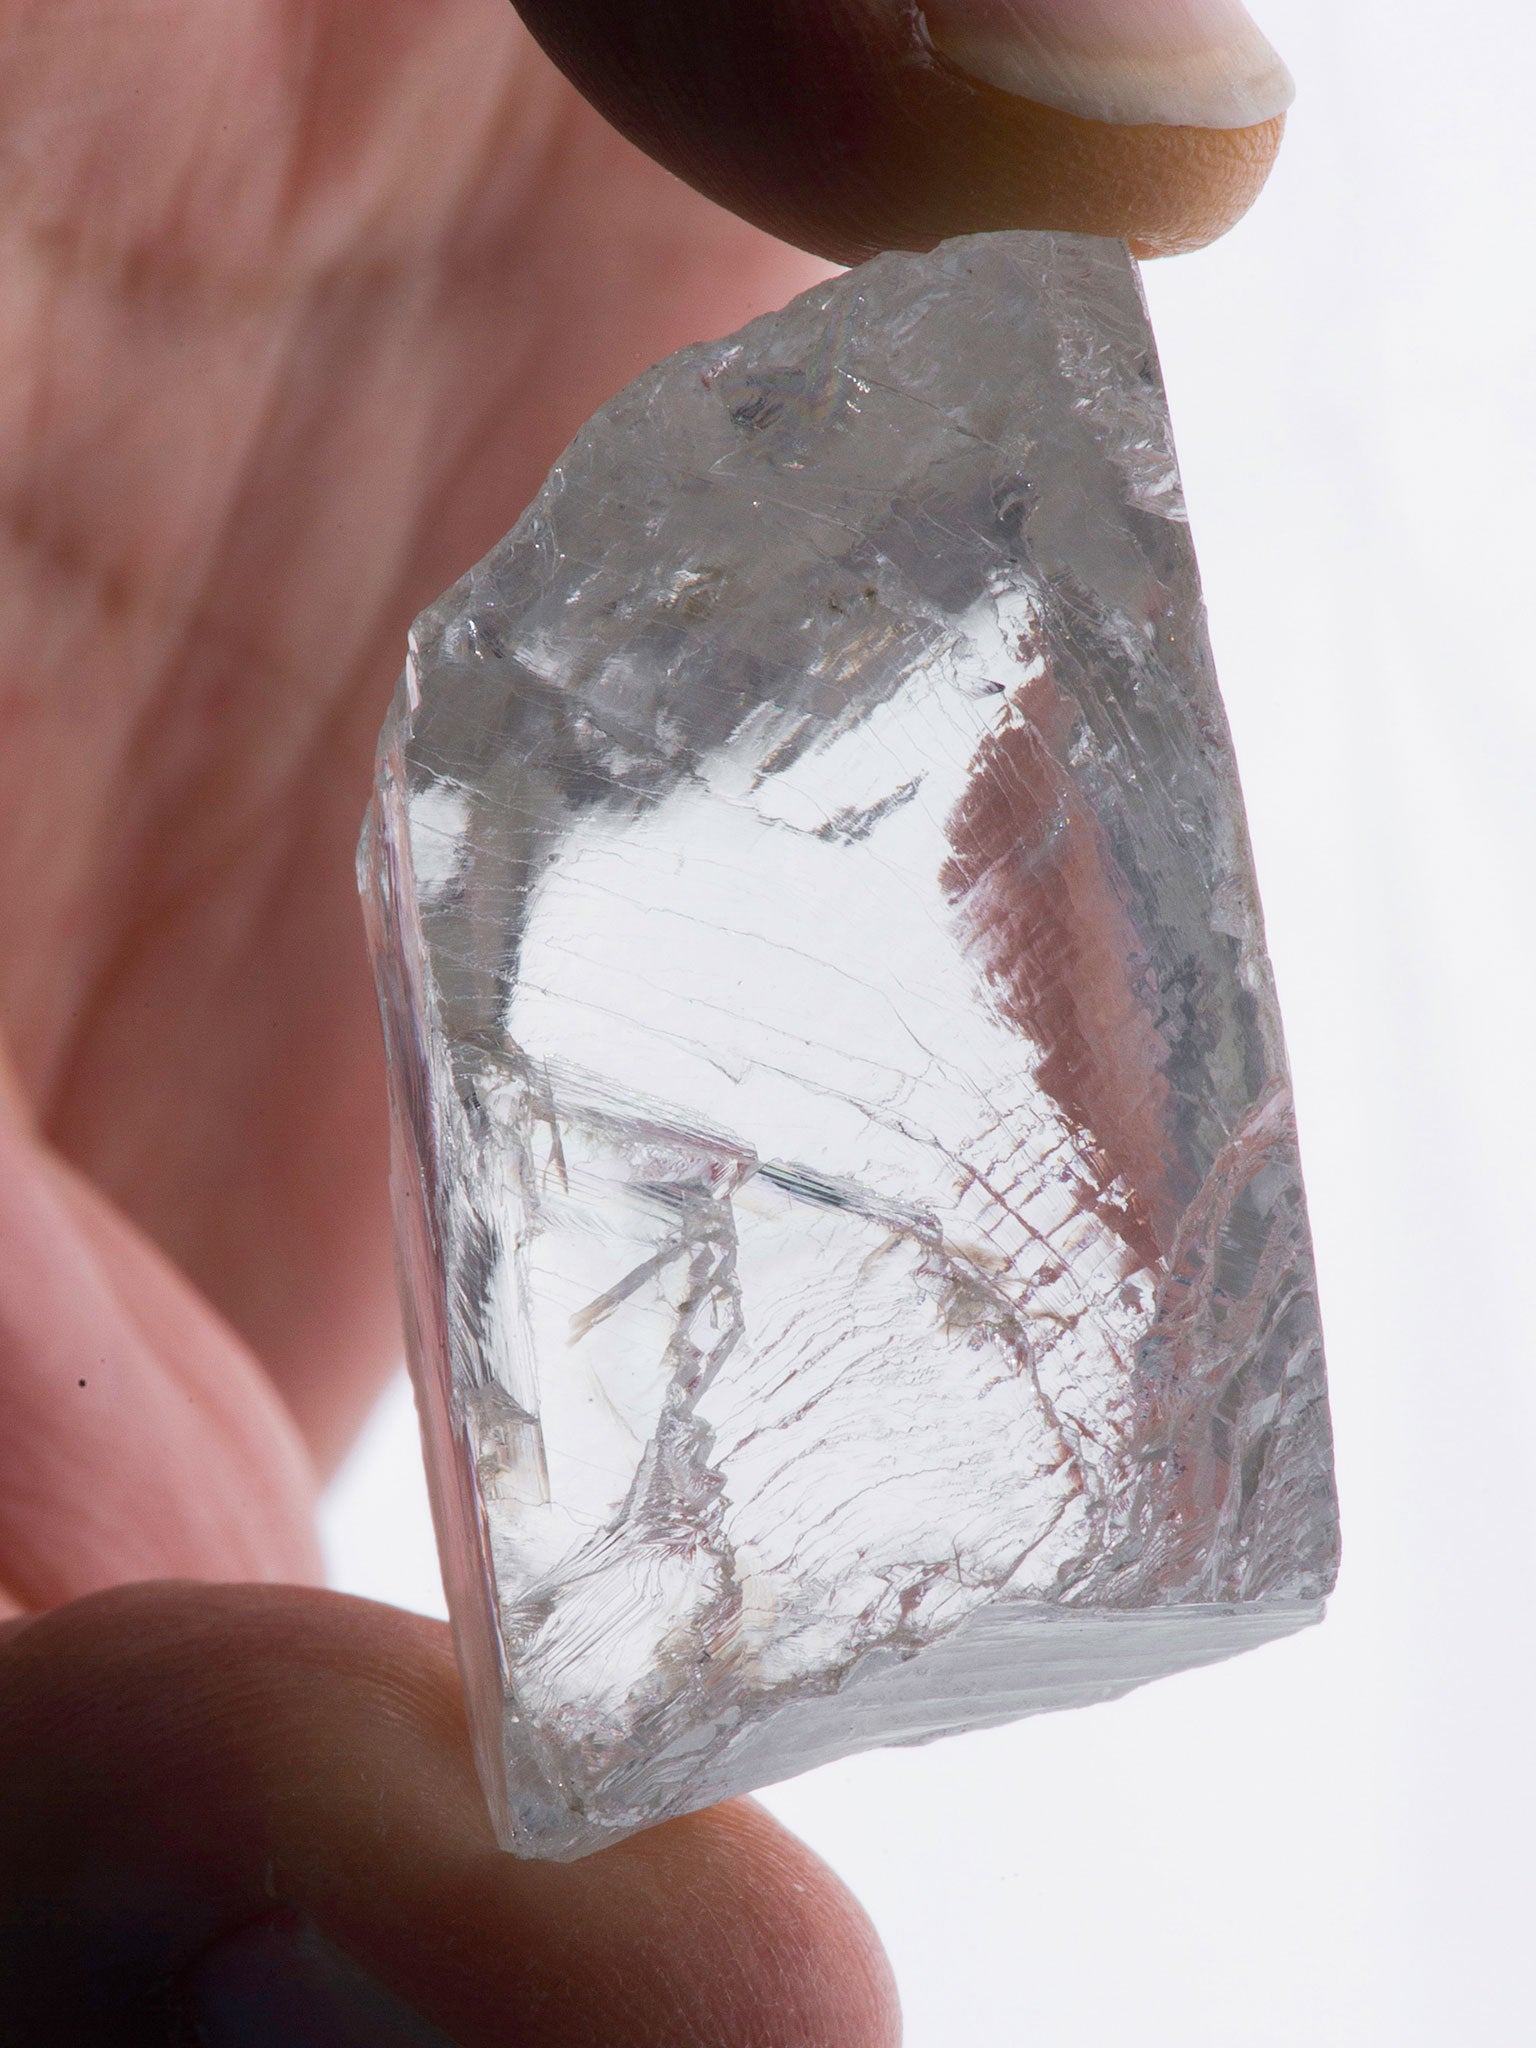 The 232-carat white diamond